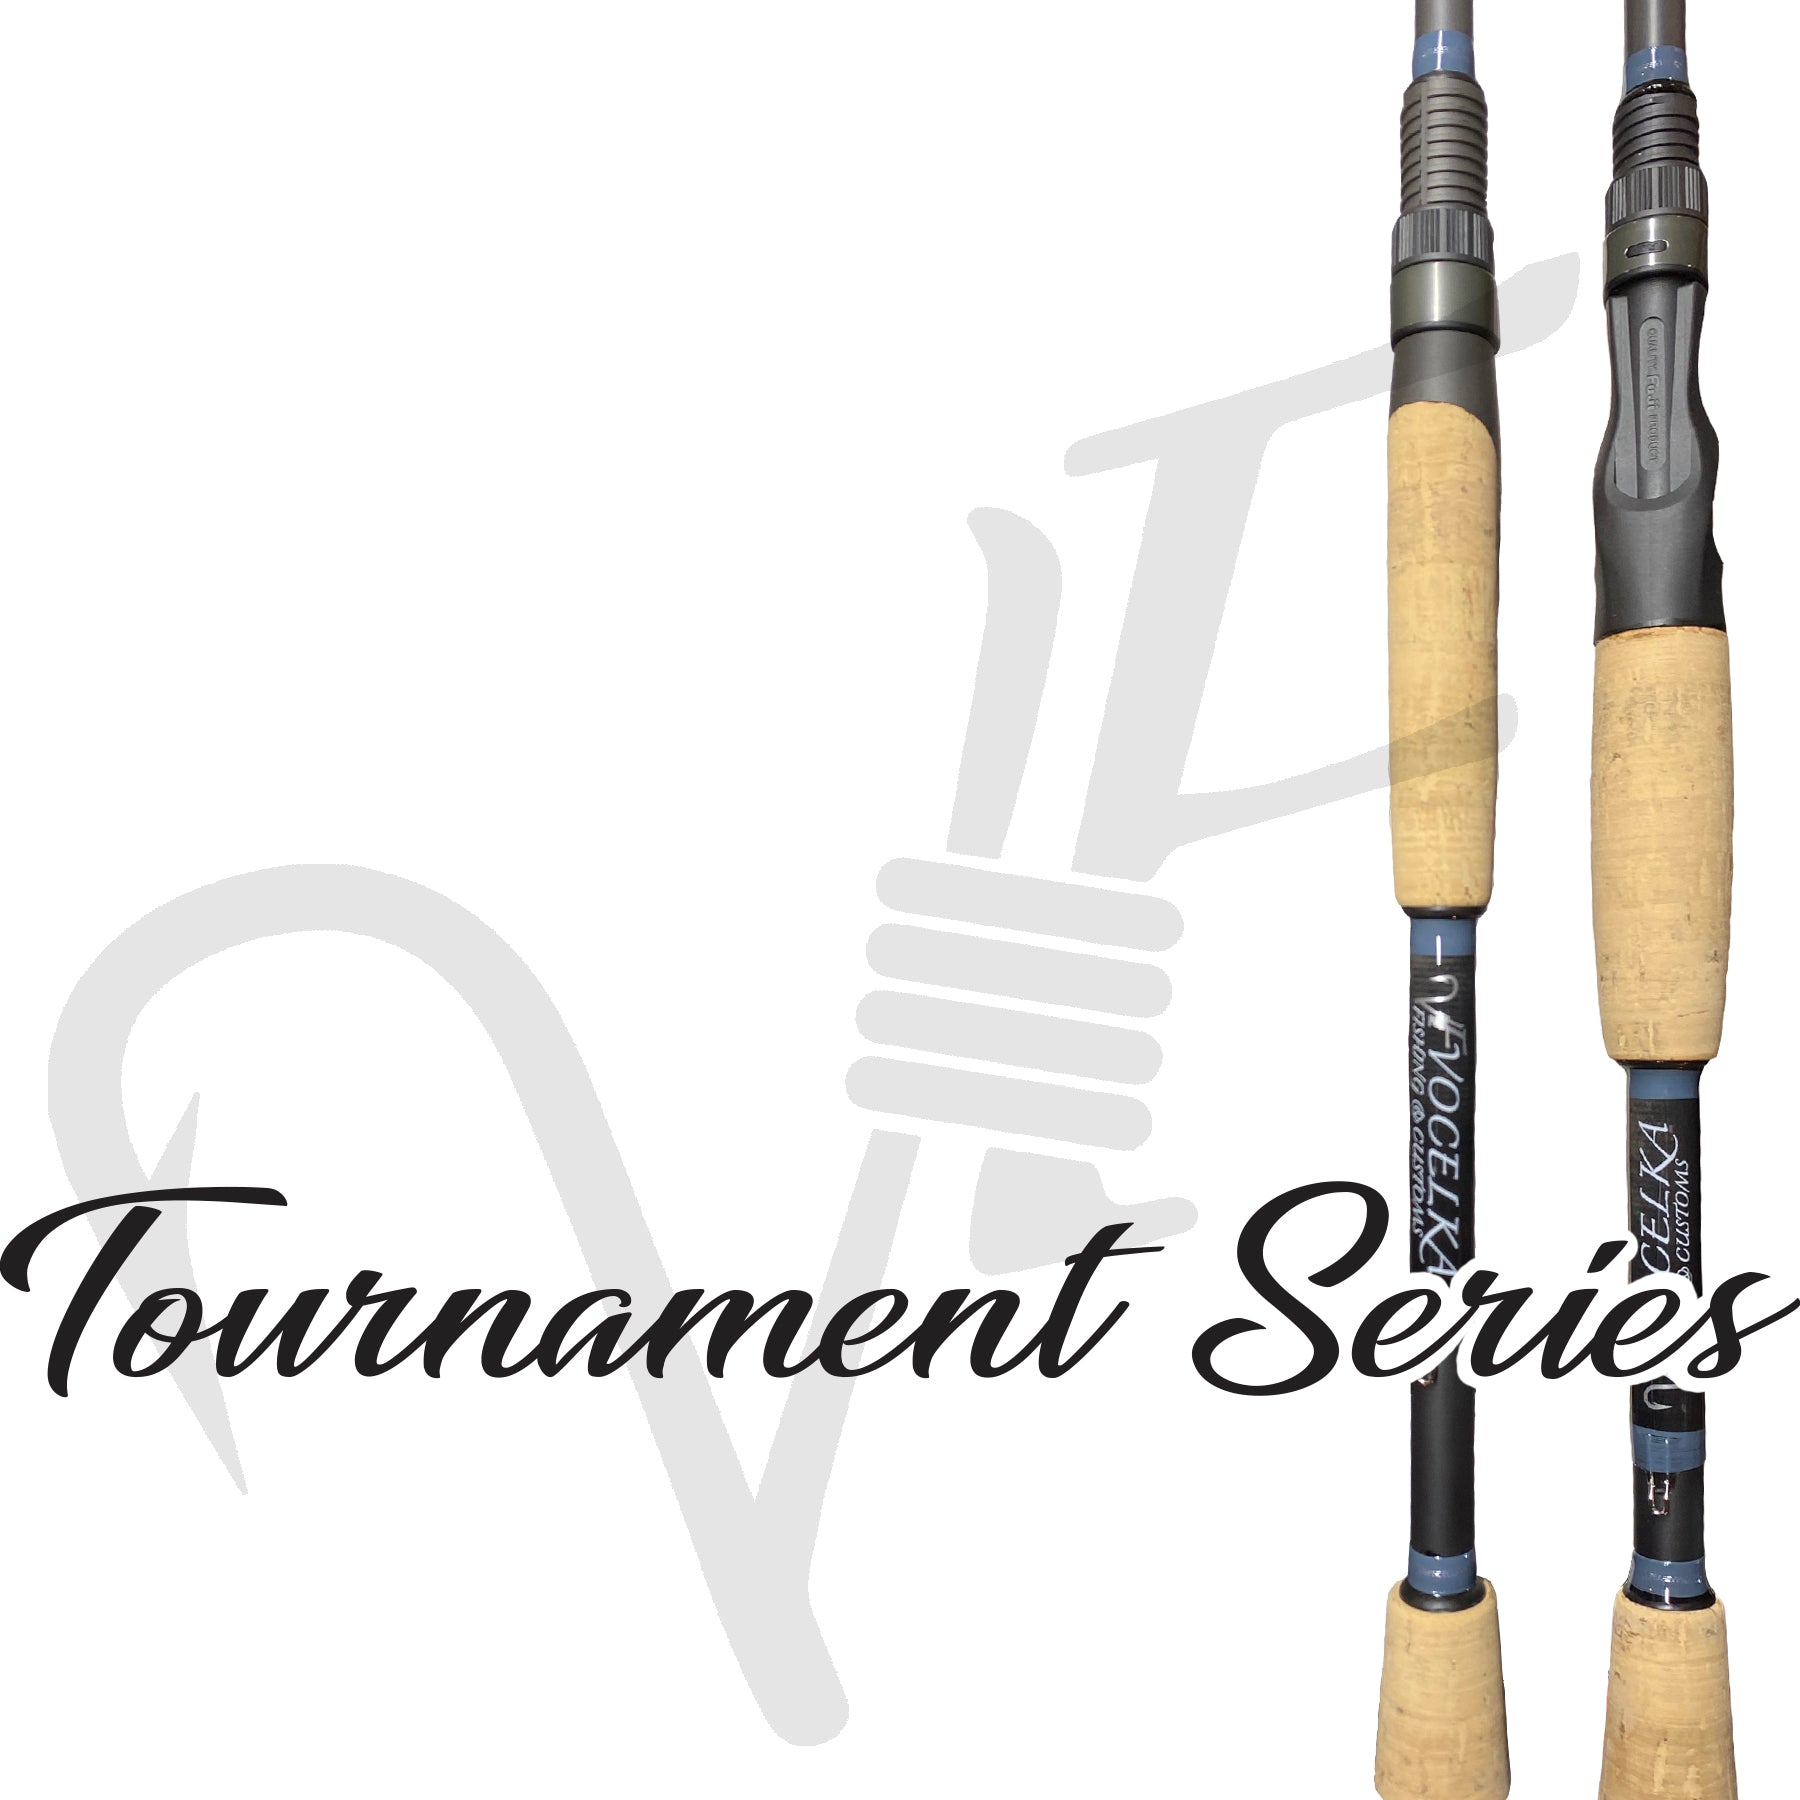 Tournament Series Jig Worm Rod - 7' Spinning Medium F